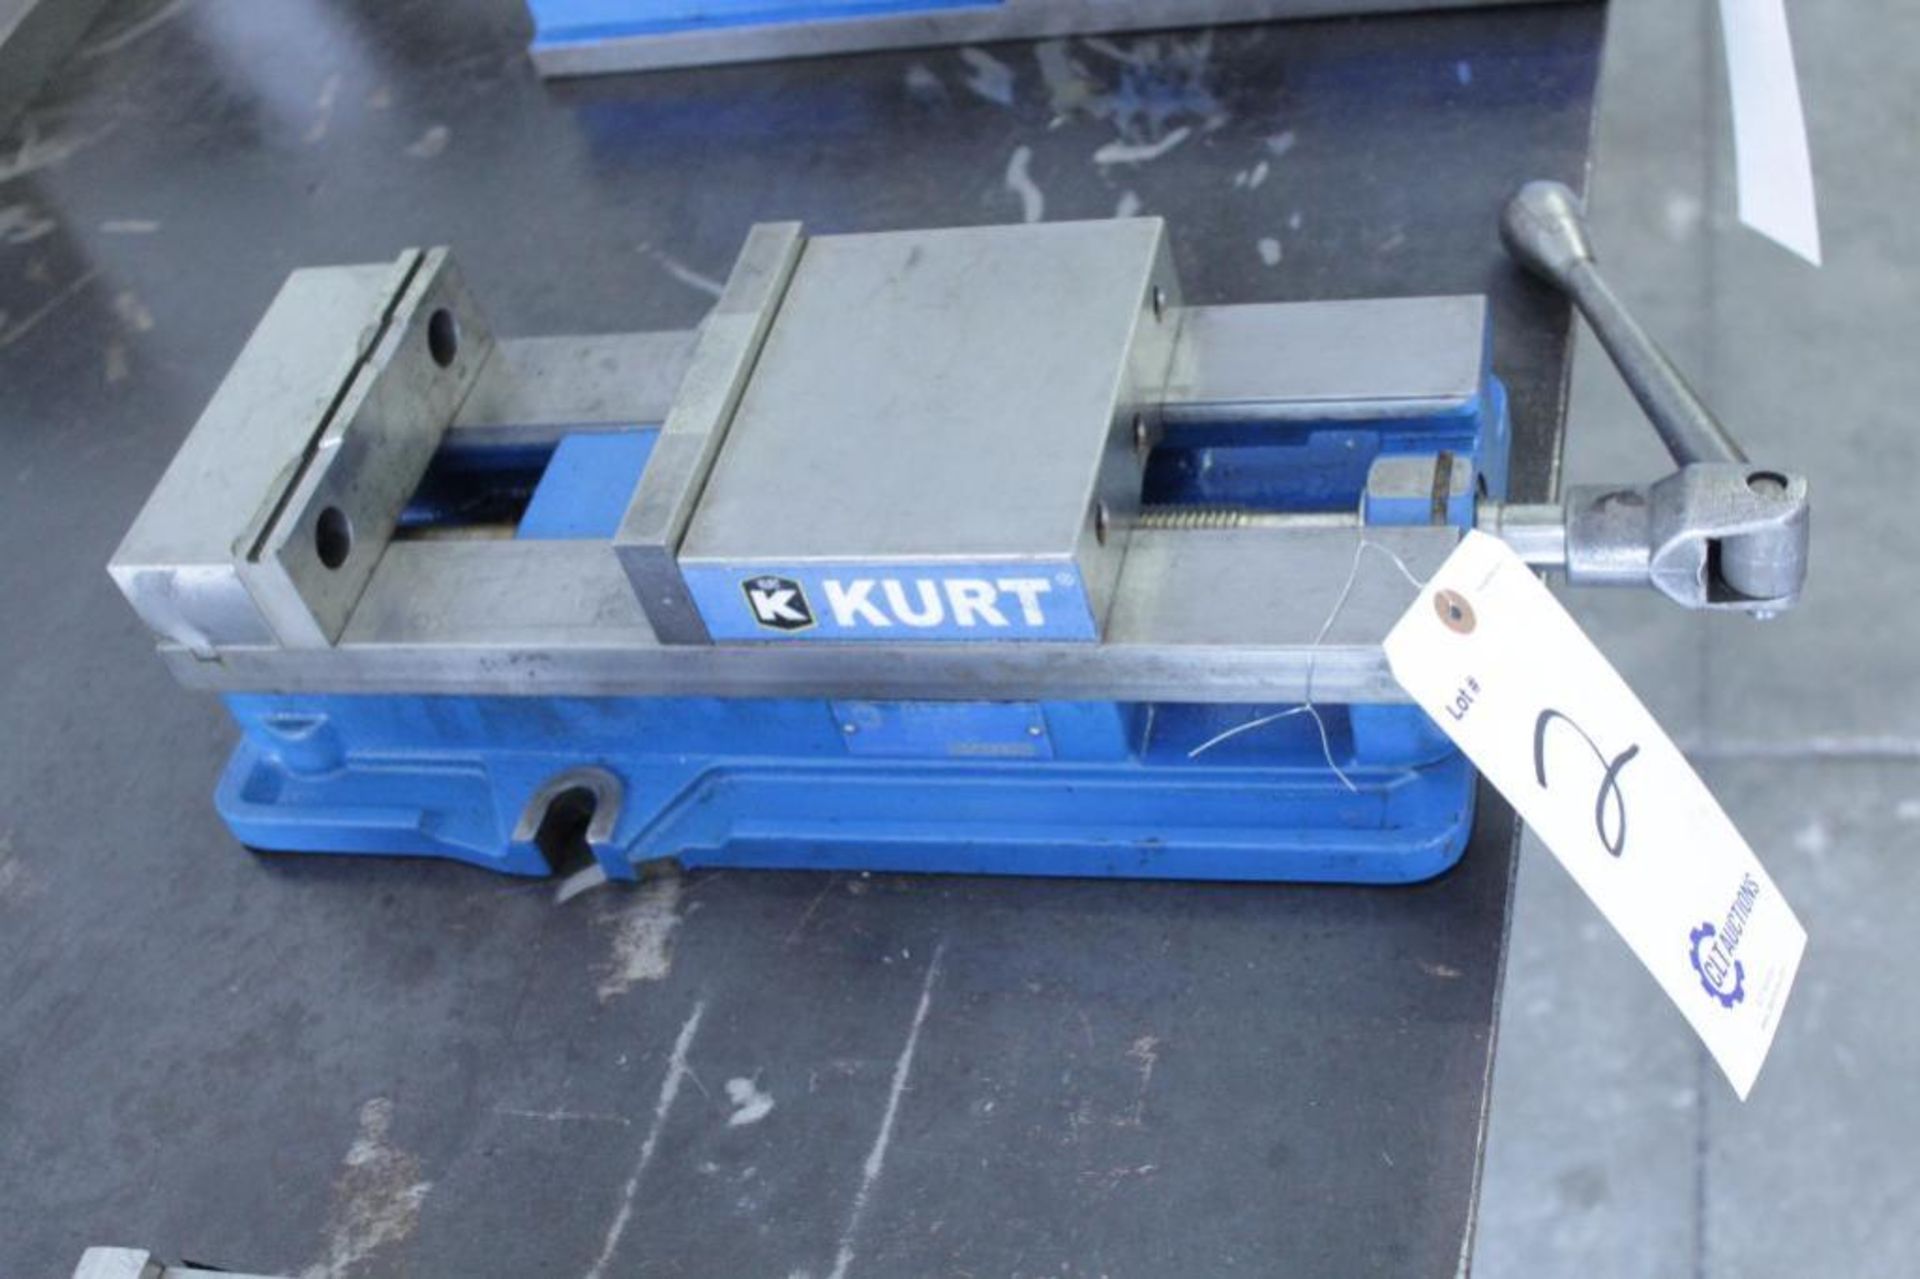 Kurt D-688 6" milling machine vise